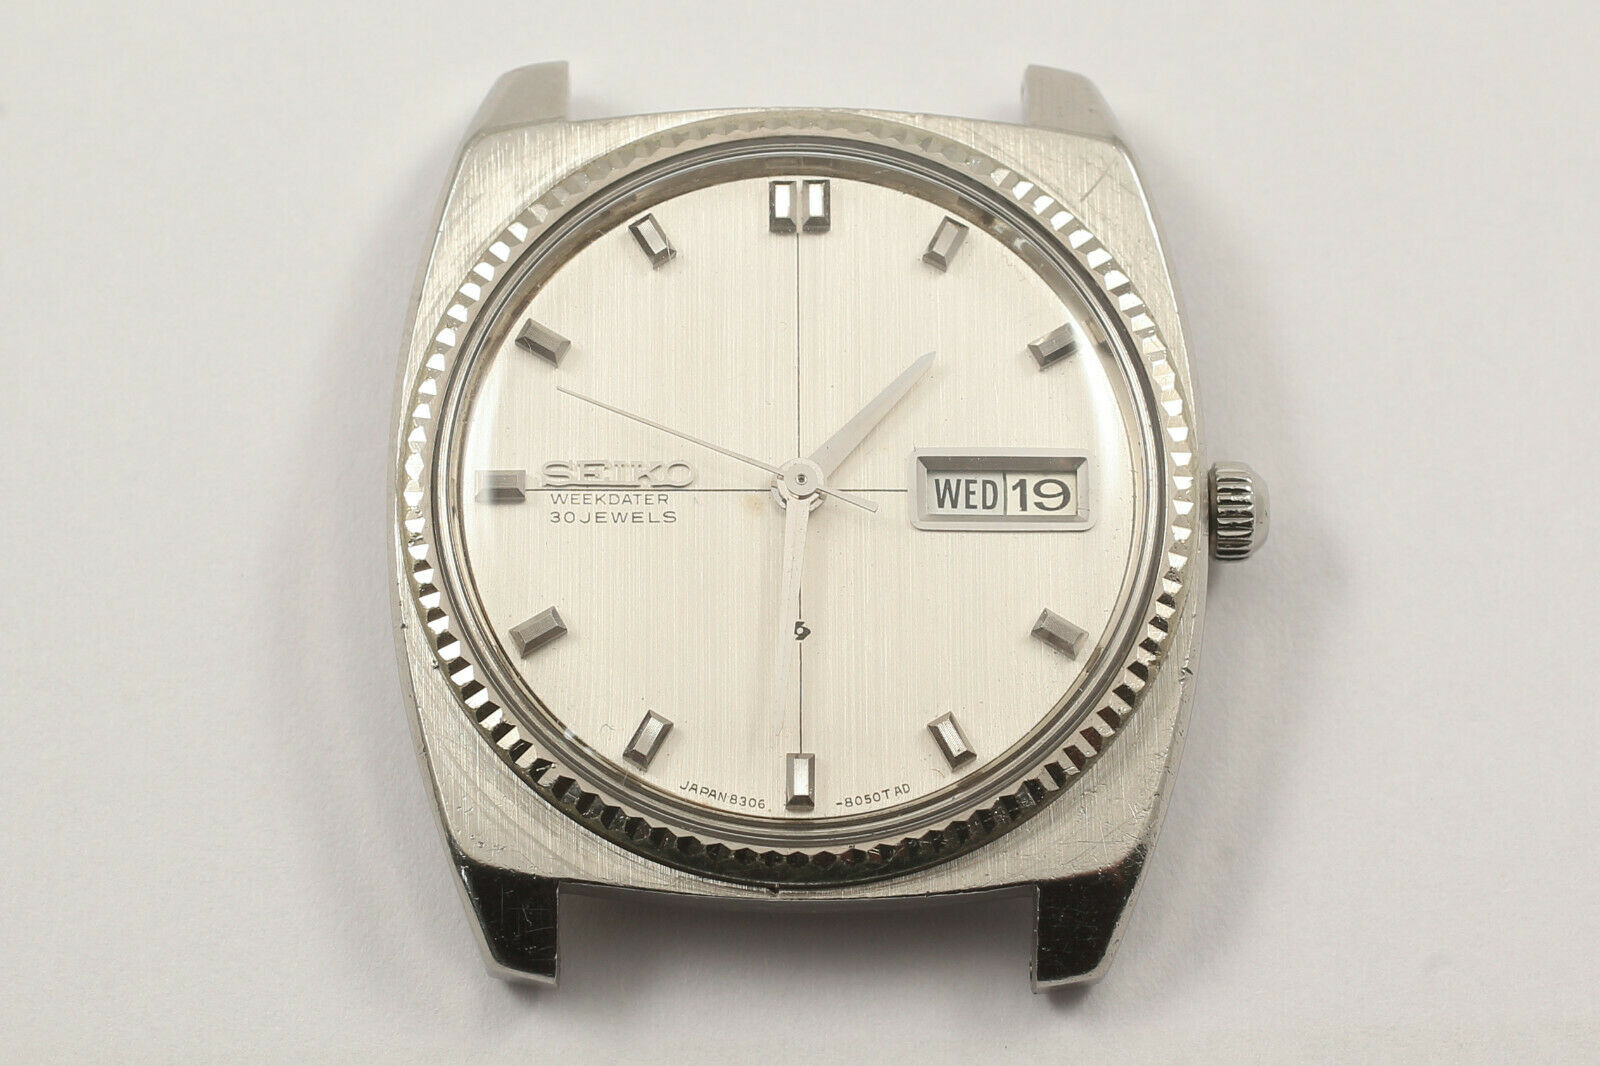 Seiko Weekdater SEA LION M99 Automatic 30 Jewel Watch 8306-8041 - December  1968 | WatchCharts